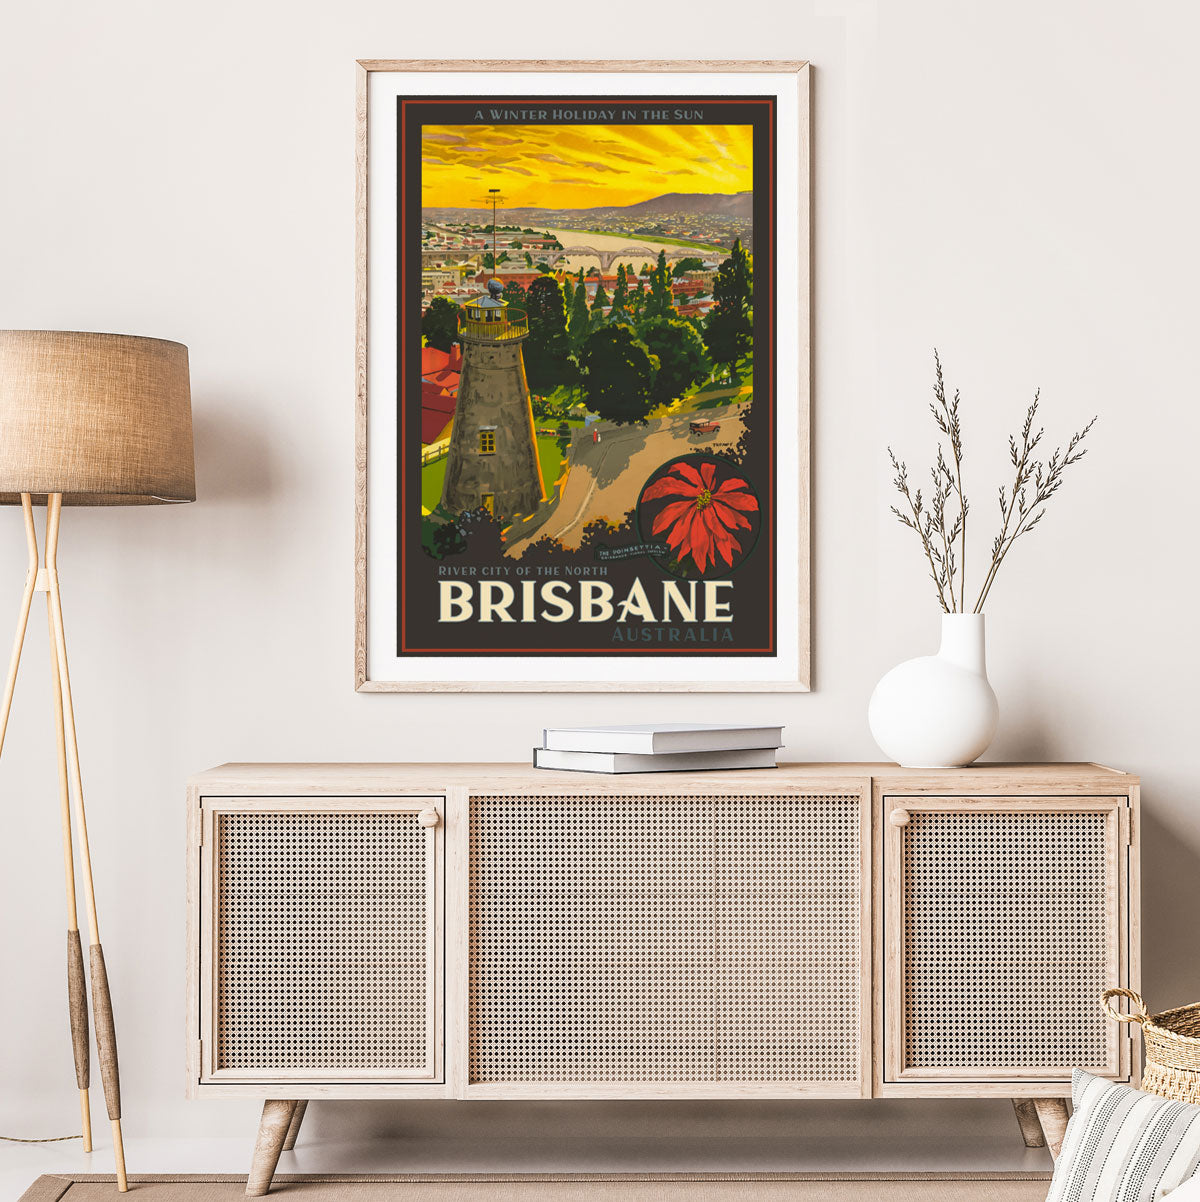 Brisbane vintage retro advertising print from Places We Luv